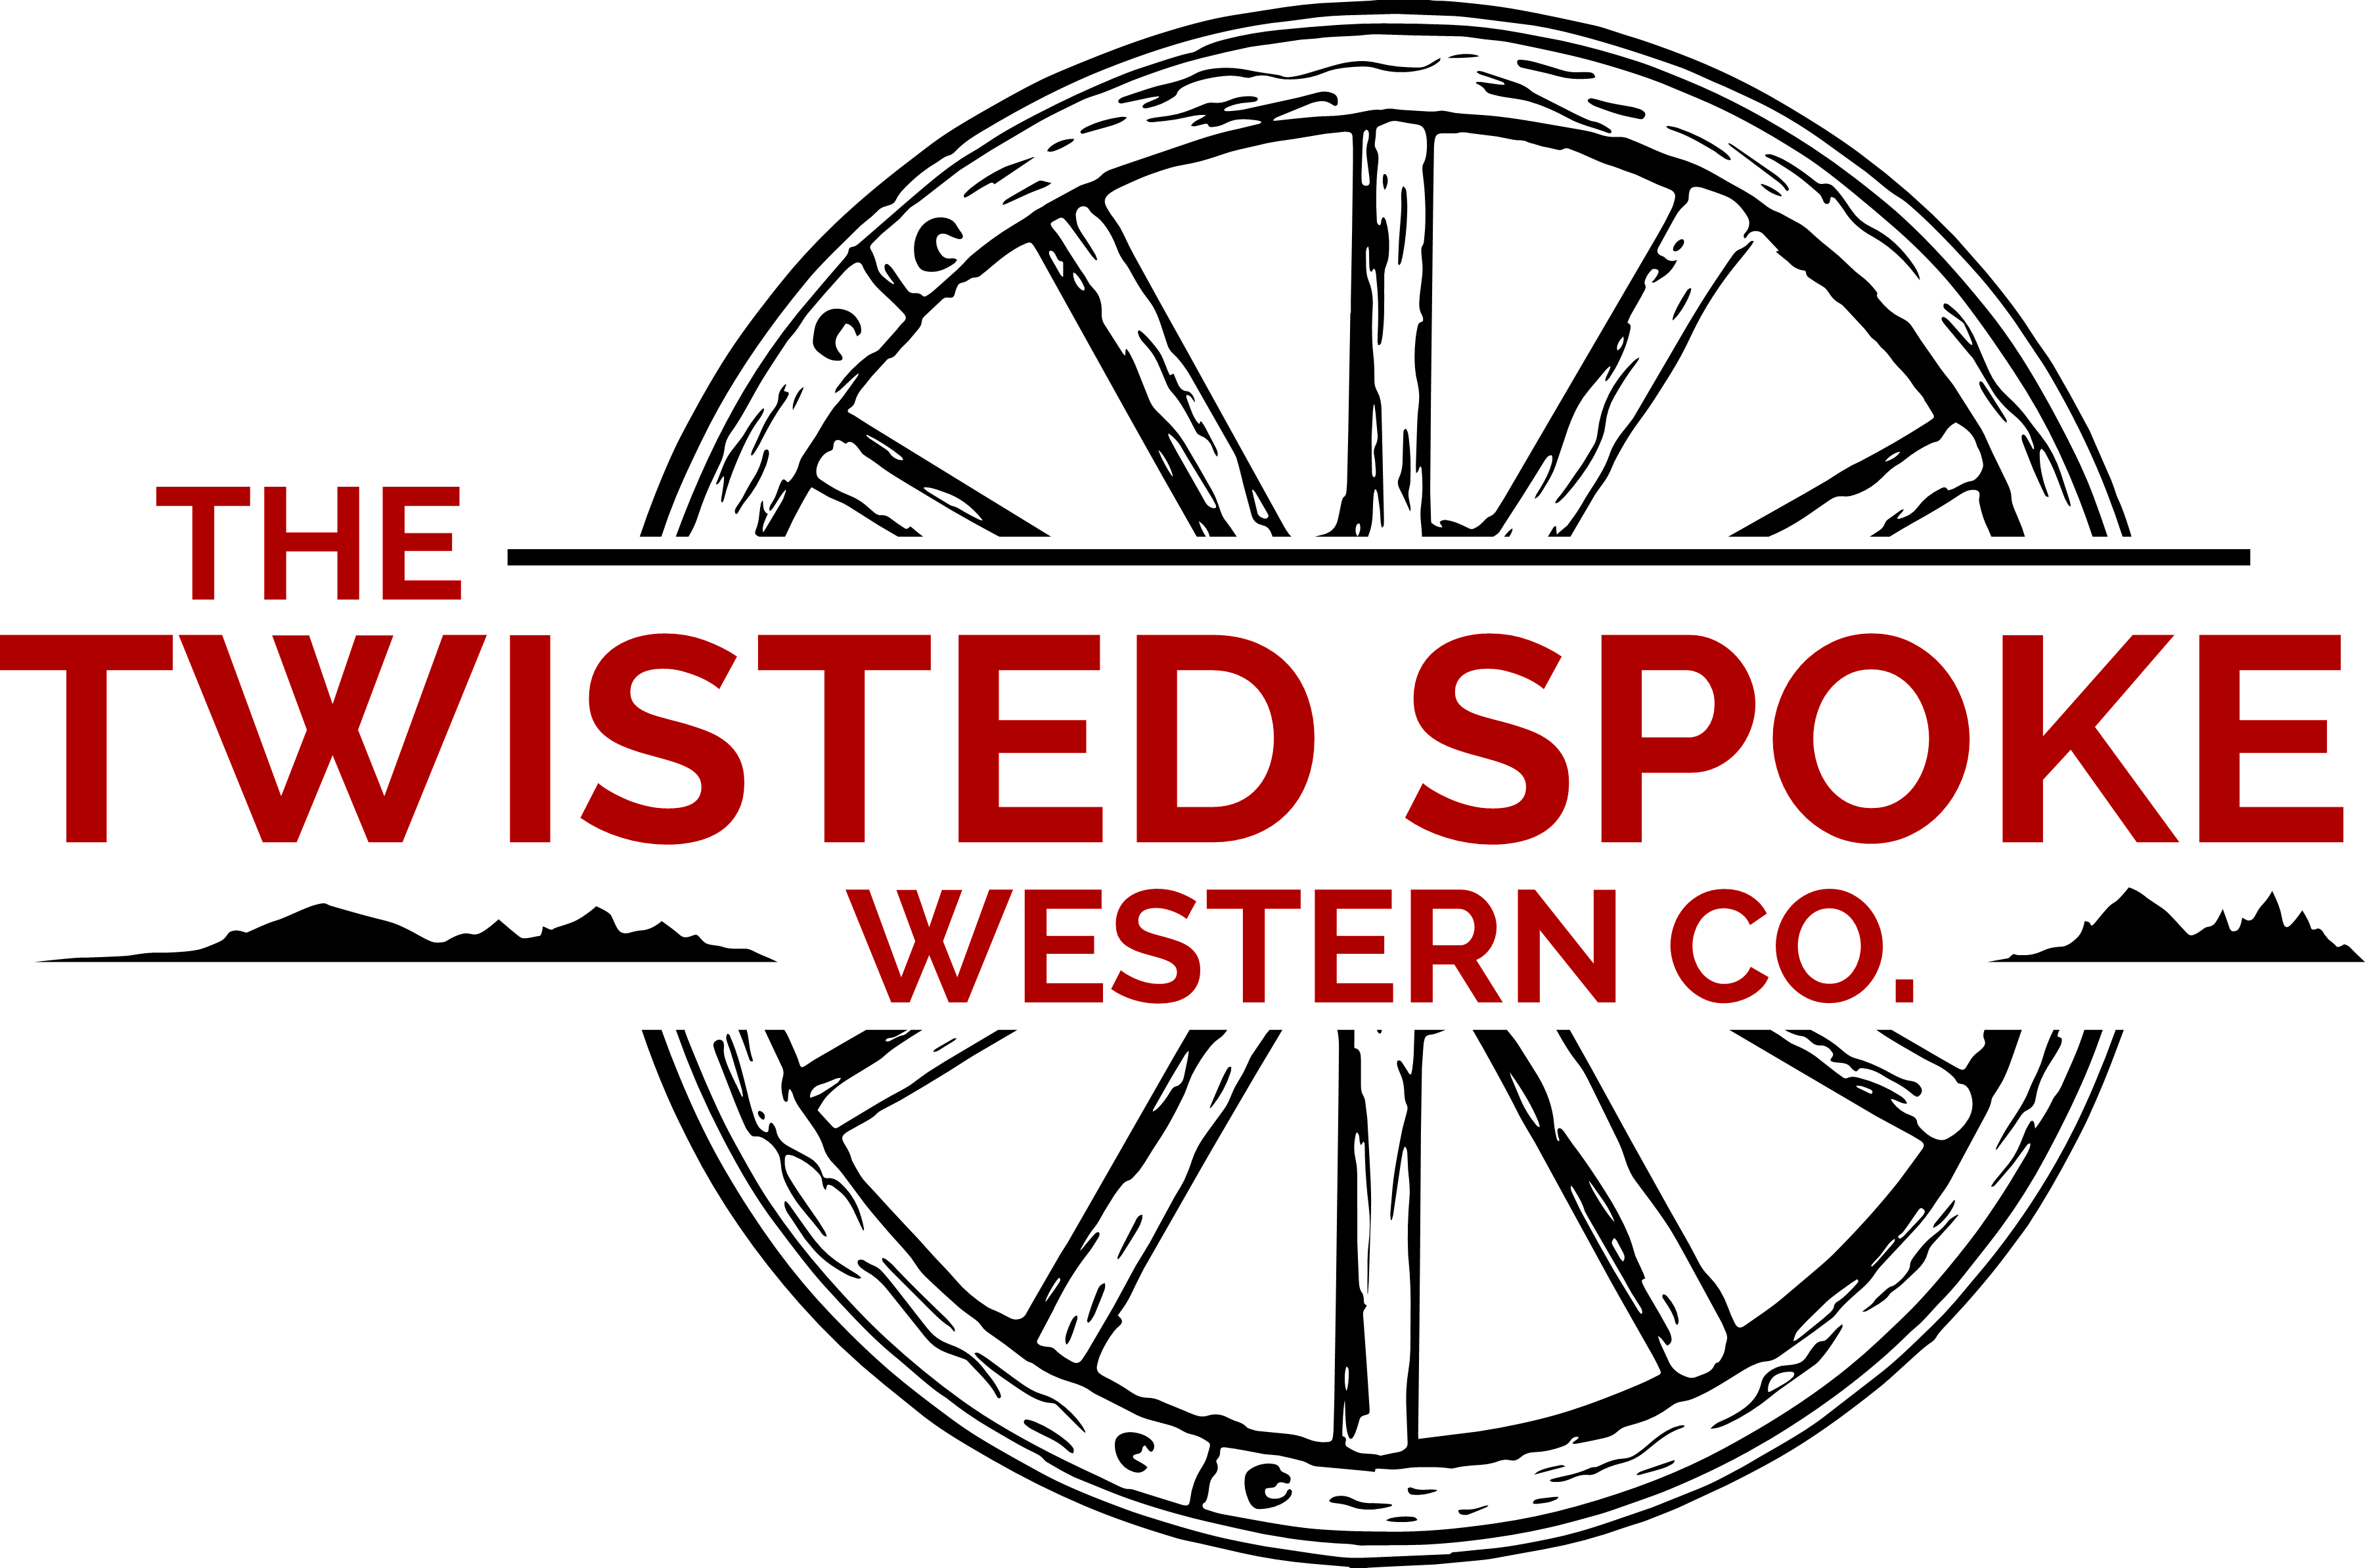 The Twisted Spoke Western Co